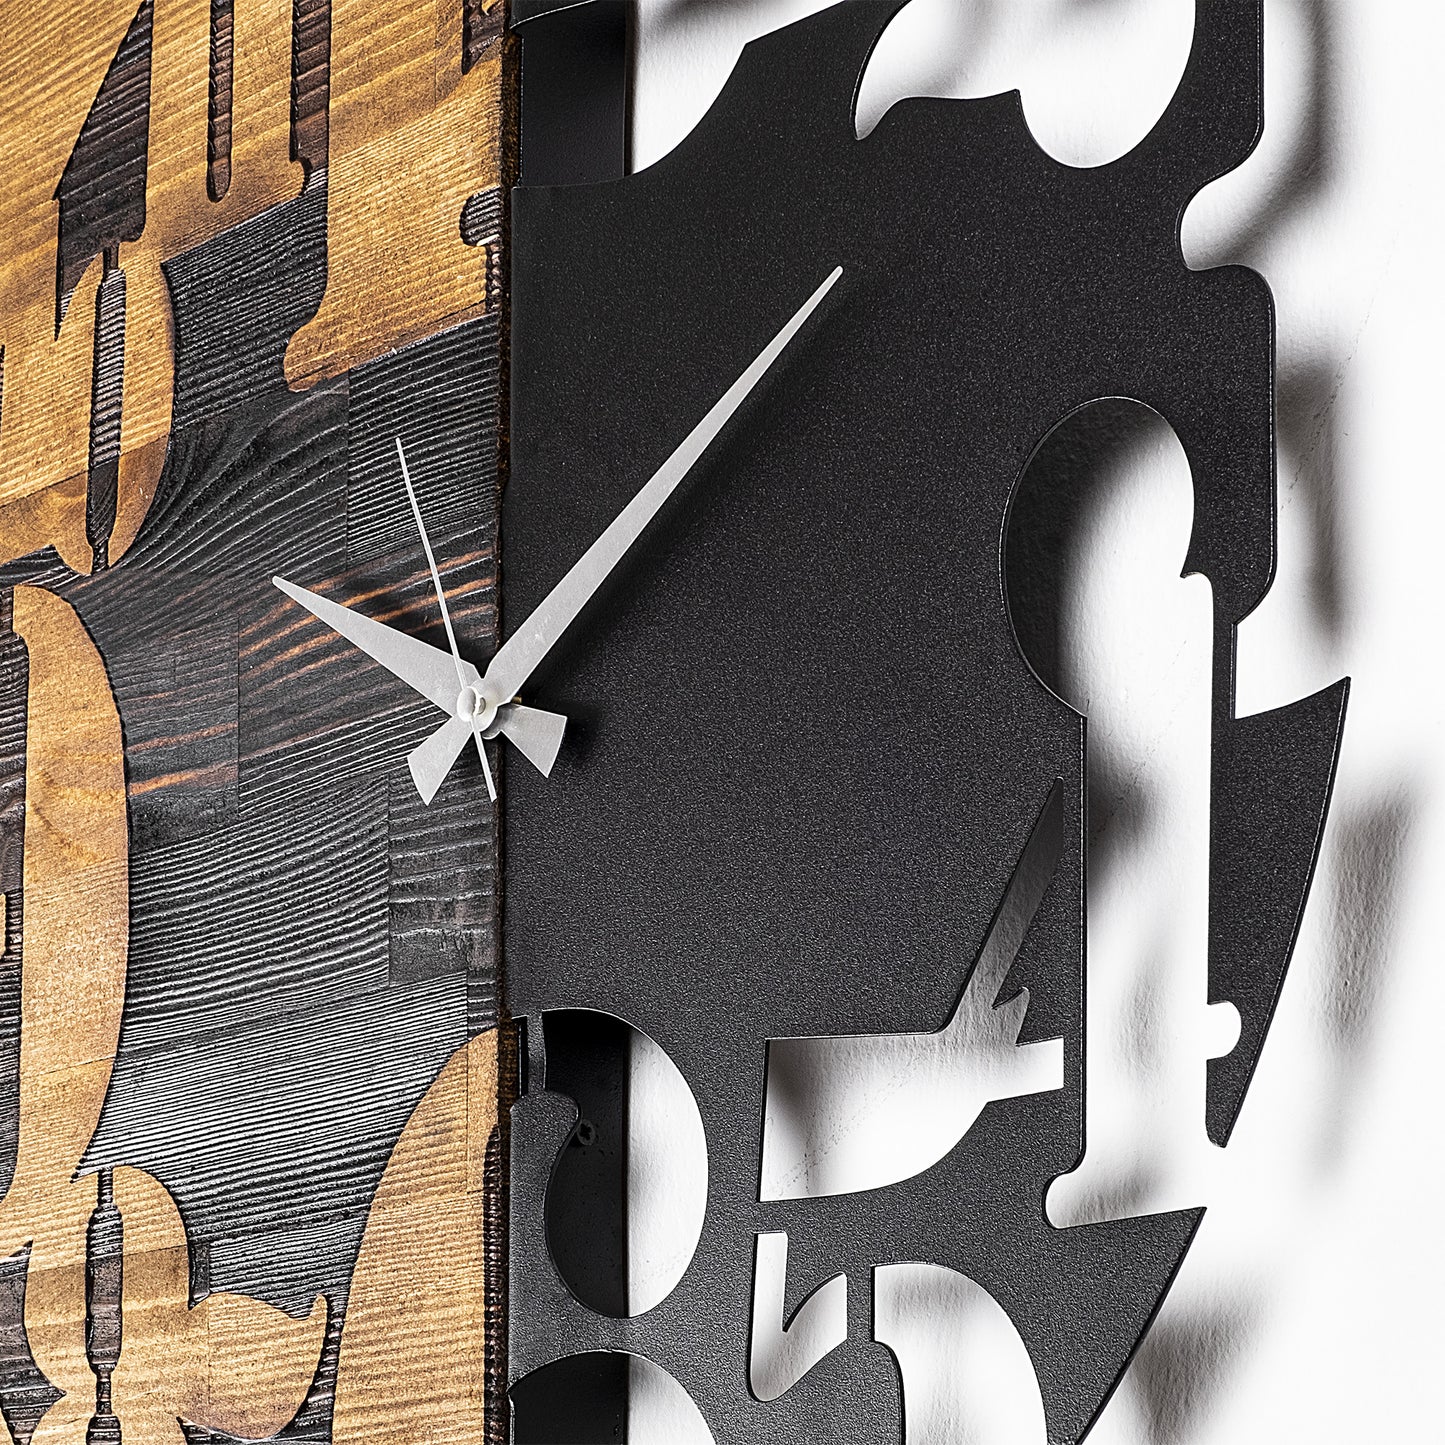 TAKK Wooden Clock 3 - NordlyHome.dk